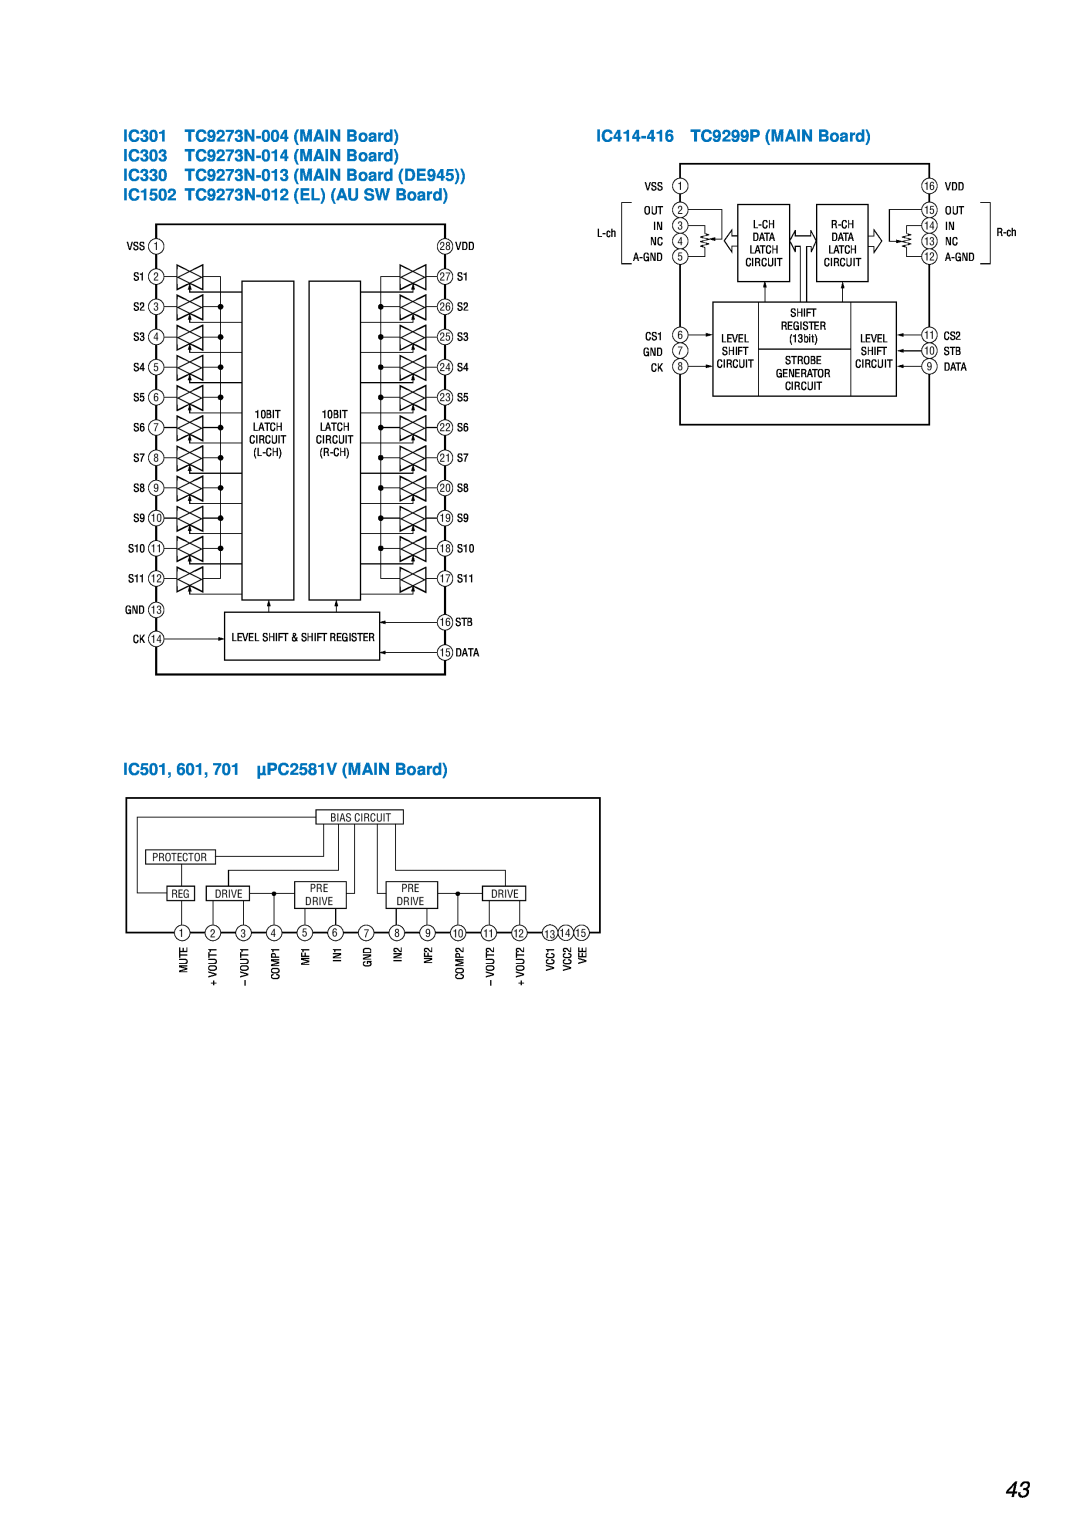 Sony STR-DE845 IC301, TC9273N-004MAIN Board, IC303, TC9273N-014MAIN Board, IC330 TC9273N-013MAIN Board DE945, IC414-416 